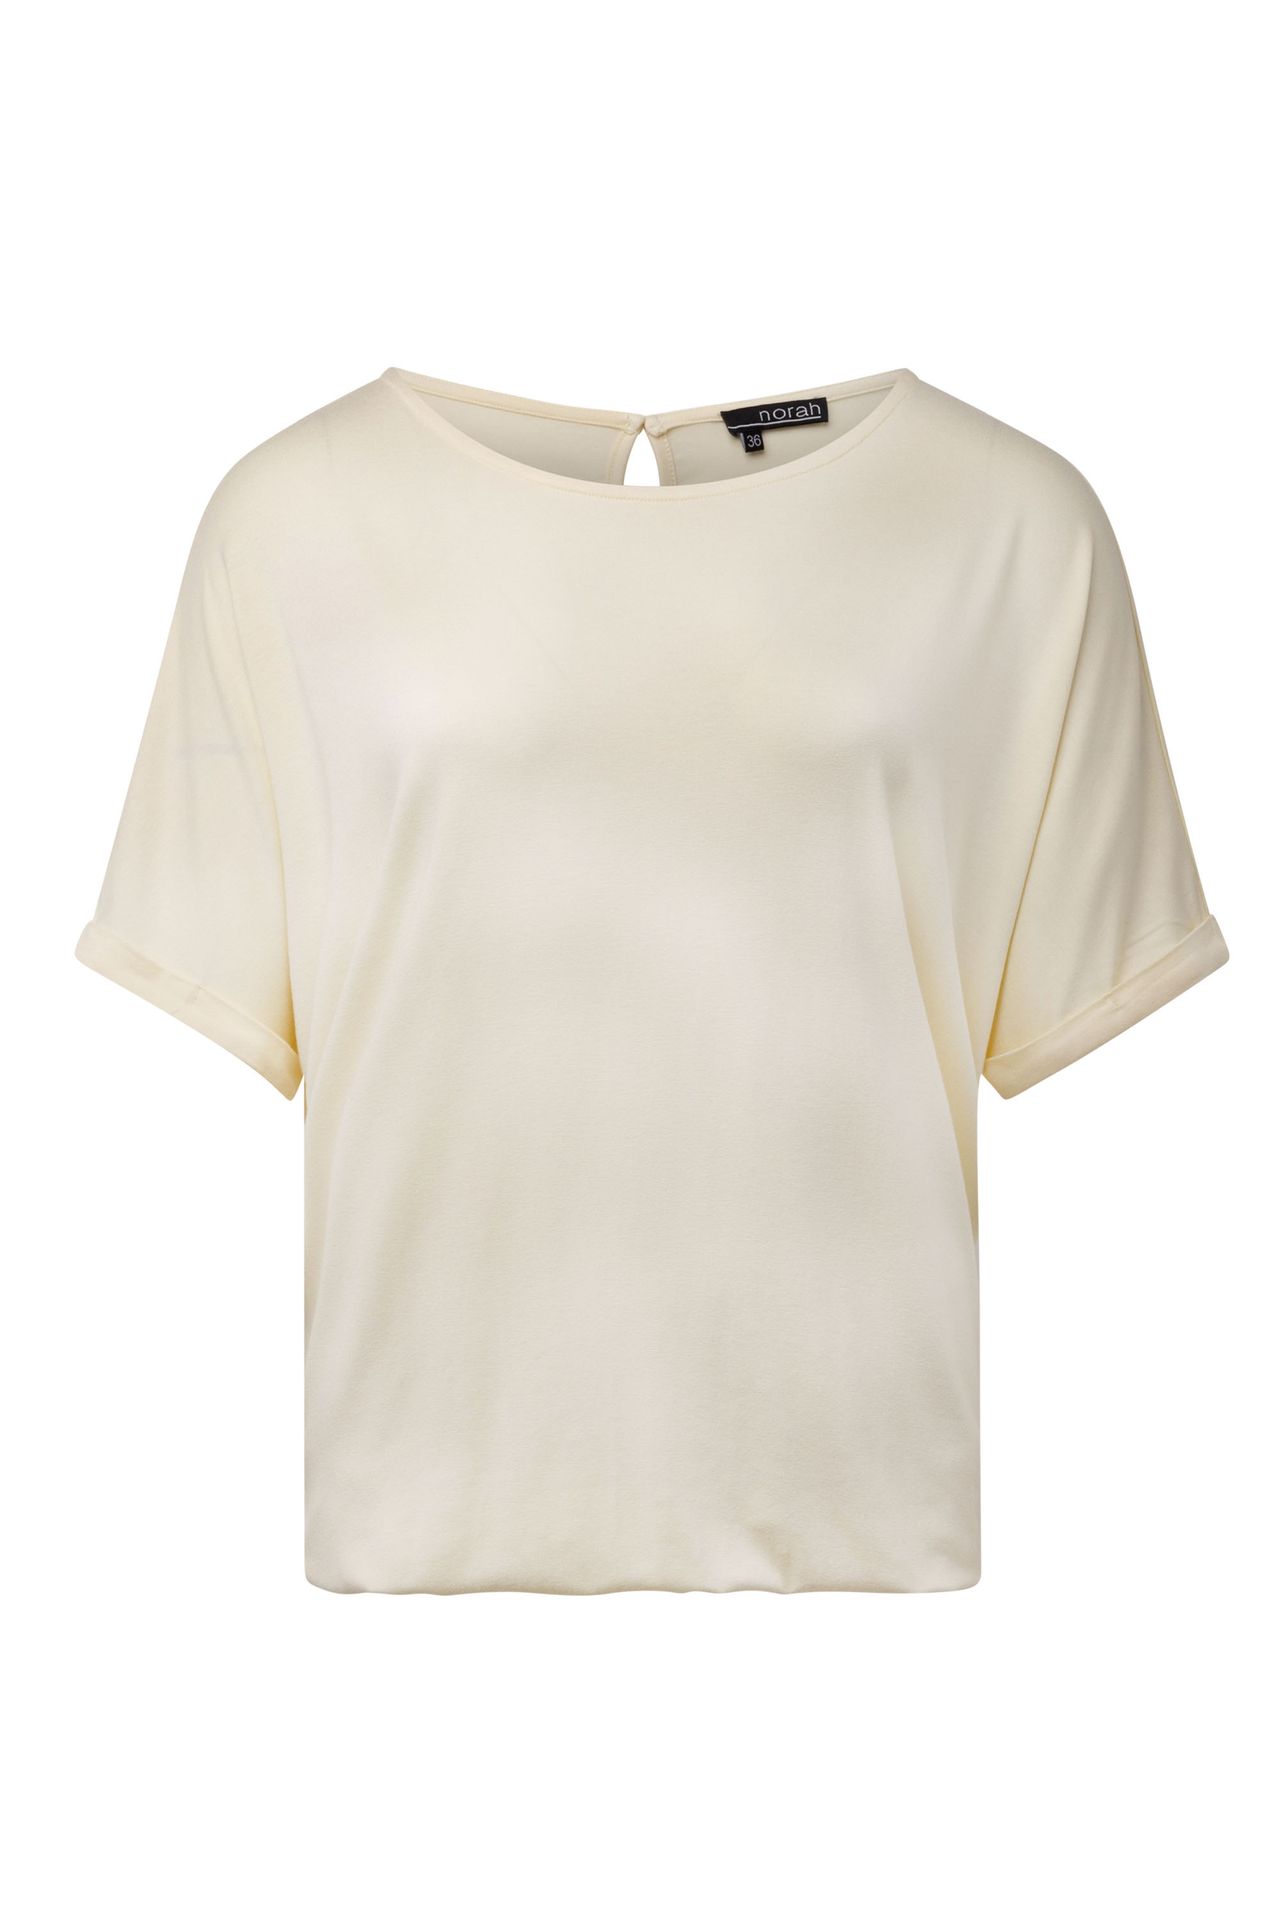 Norah Shirt lichtgeel vanilla 215230-104